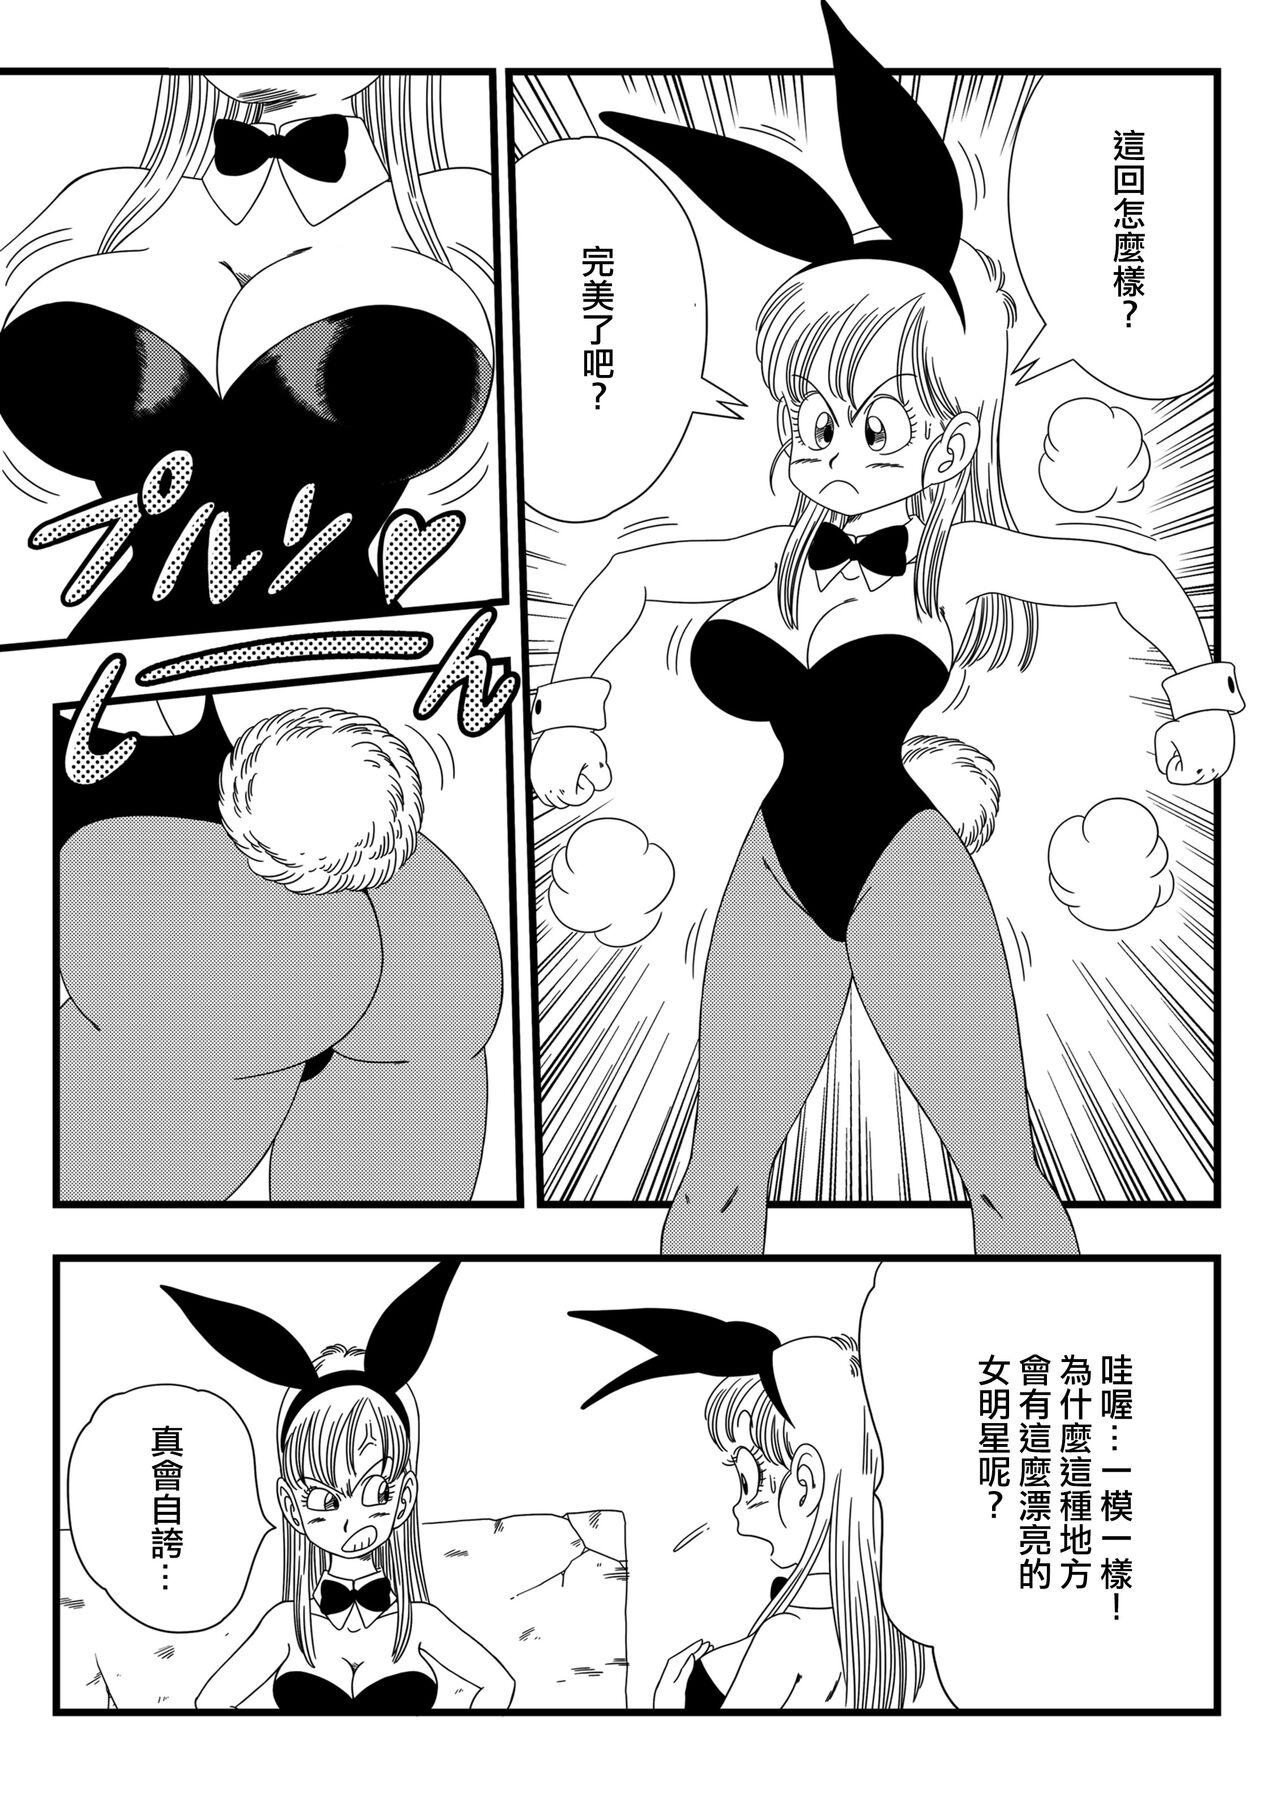 Bunny Girl Transformation 4